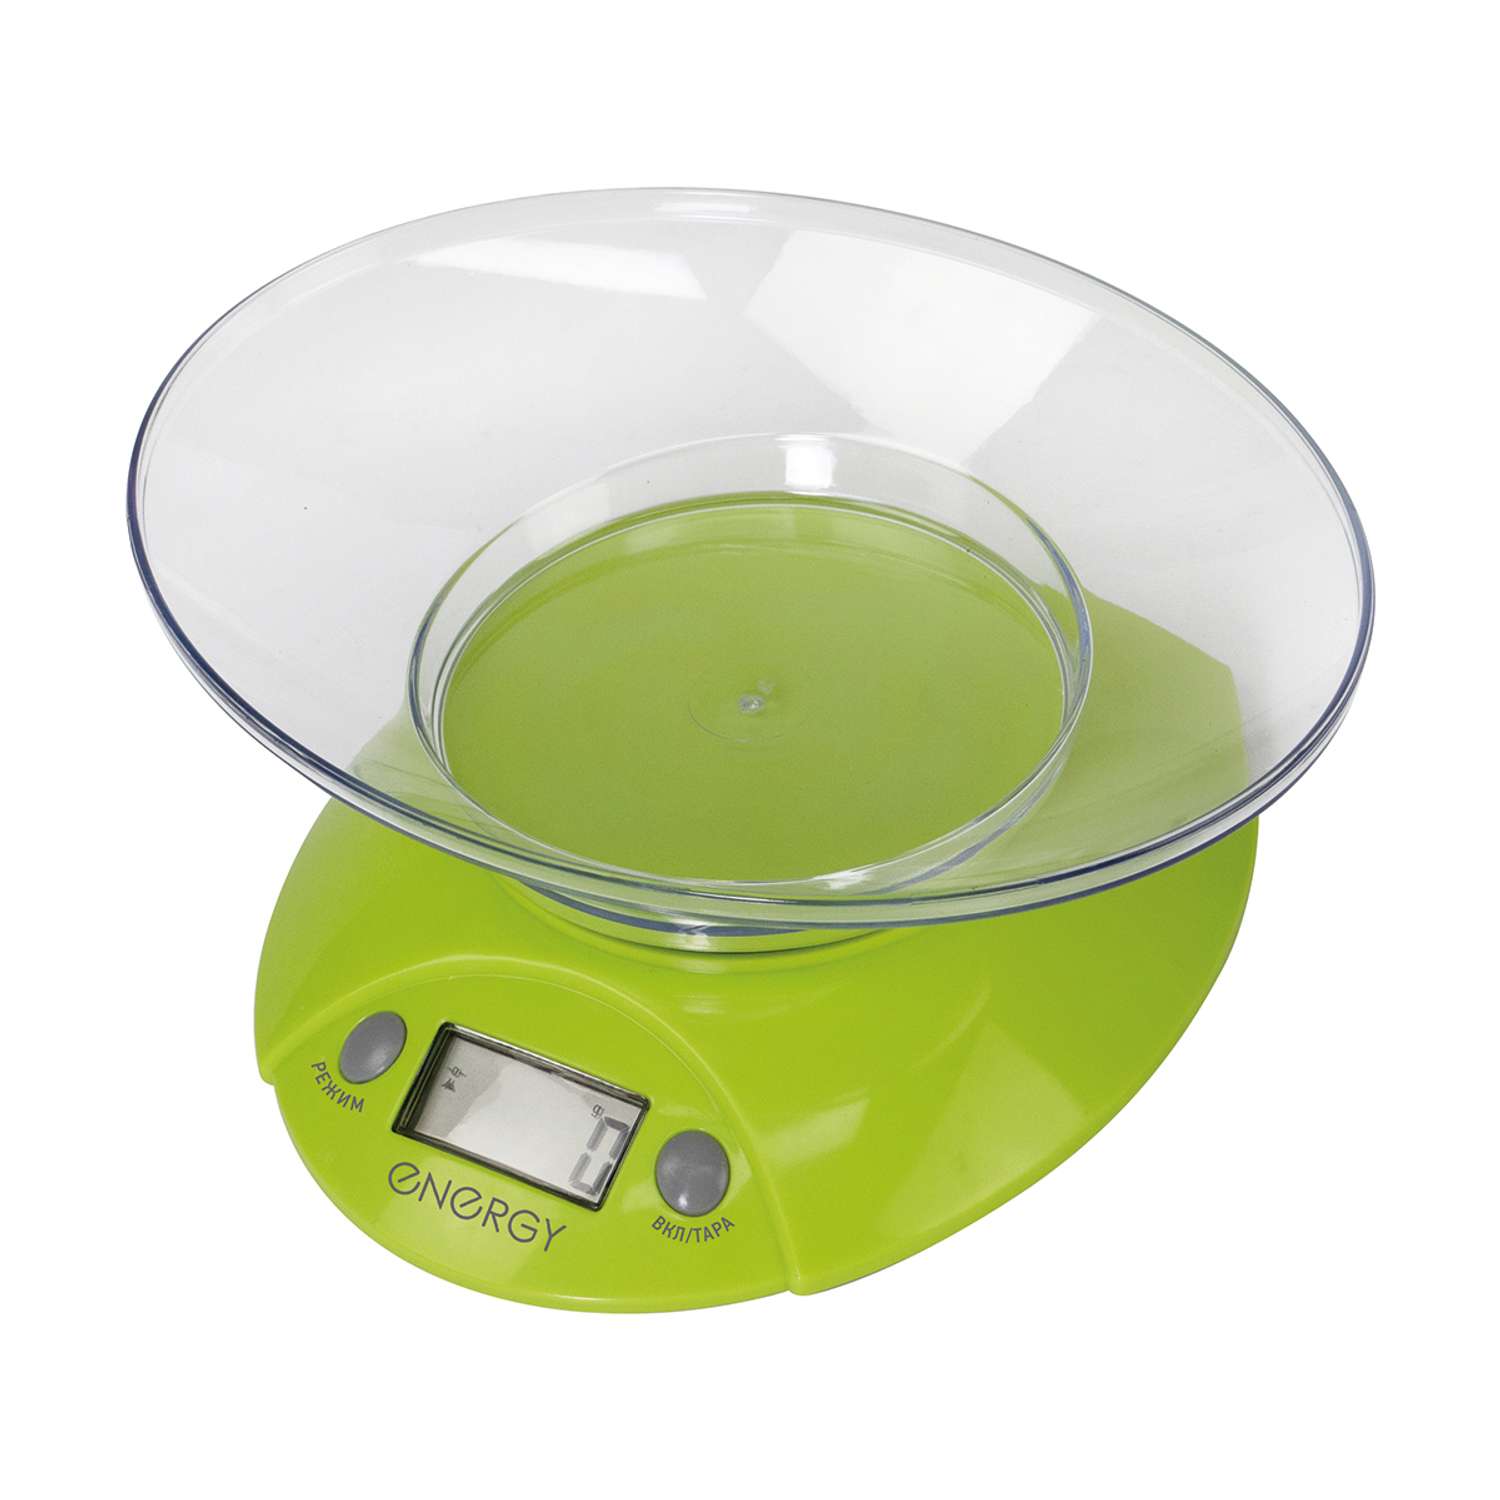 Весы кухонные электронные Energy EN-430 до 5 кг зеленые - фото 1